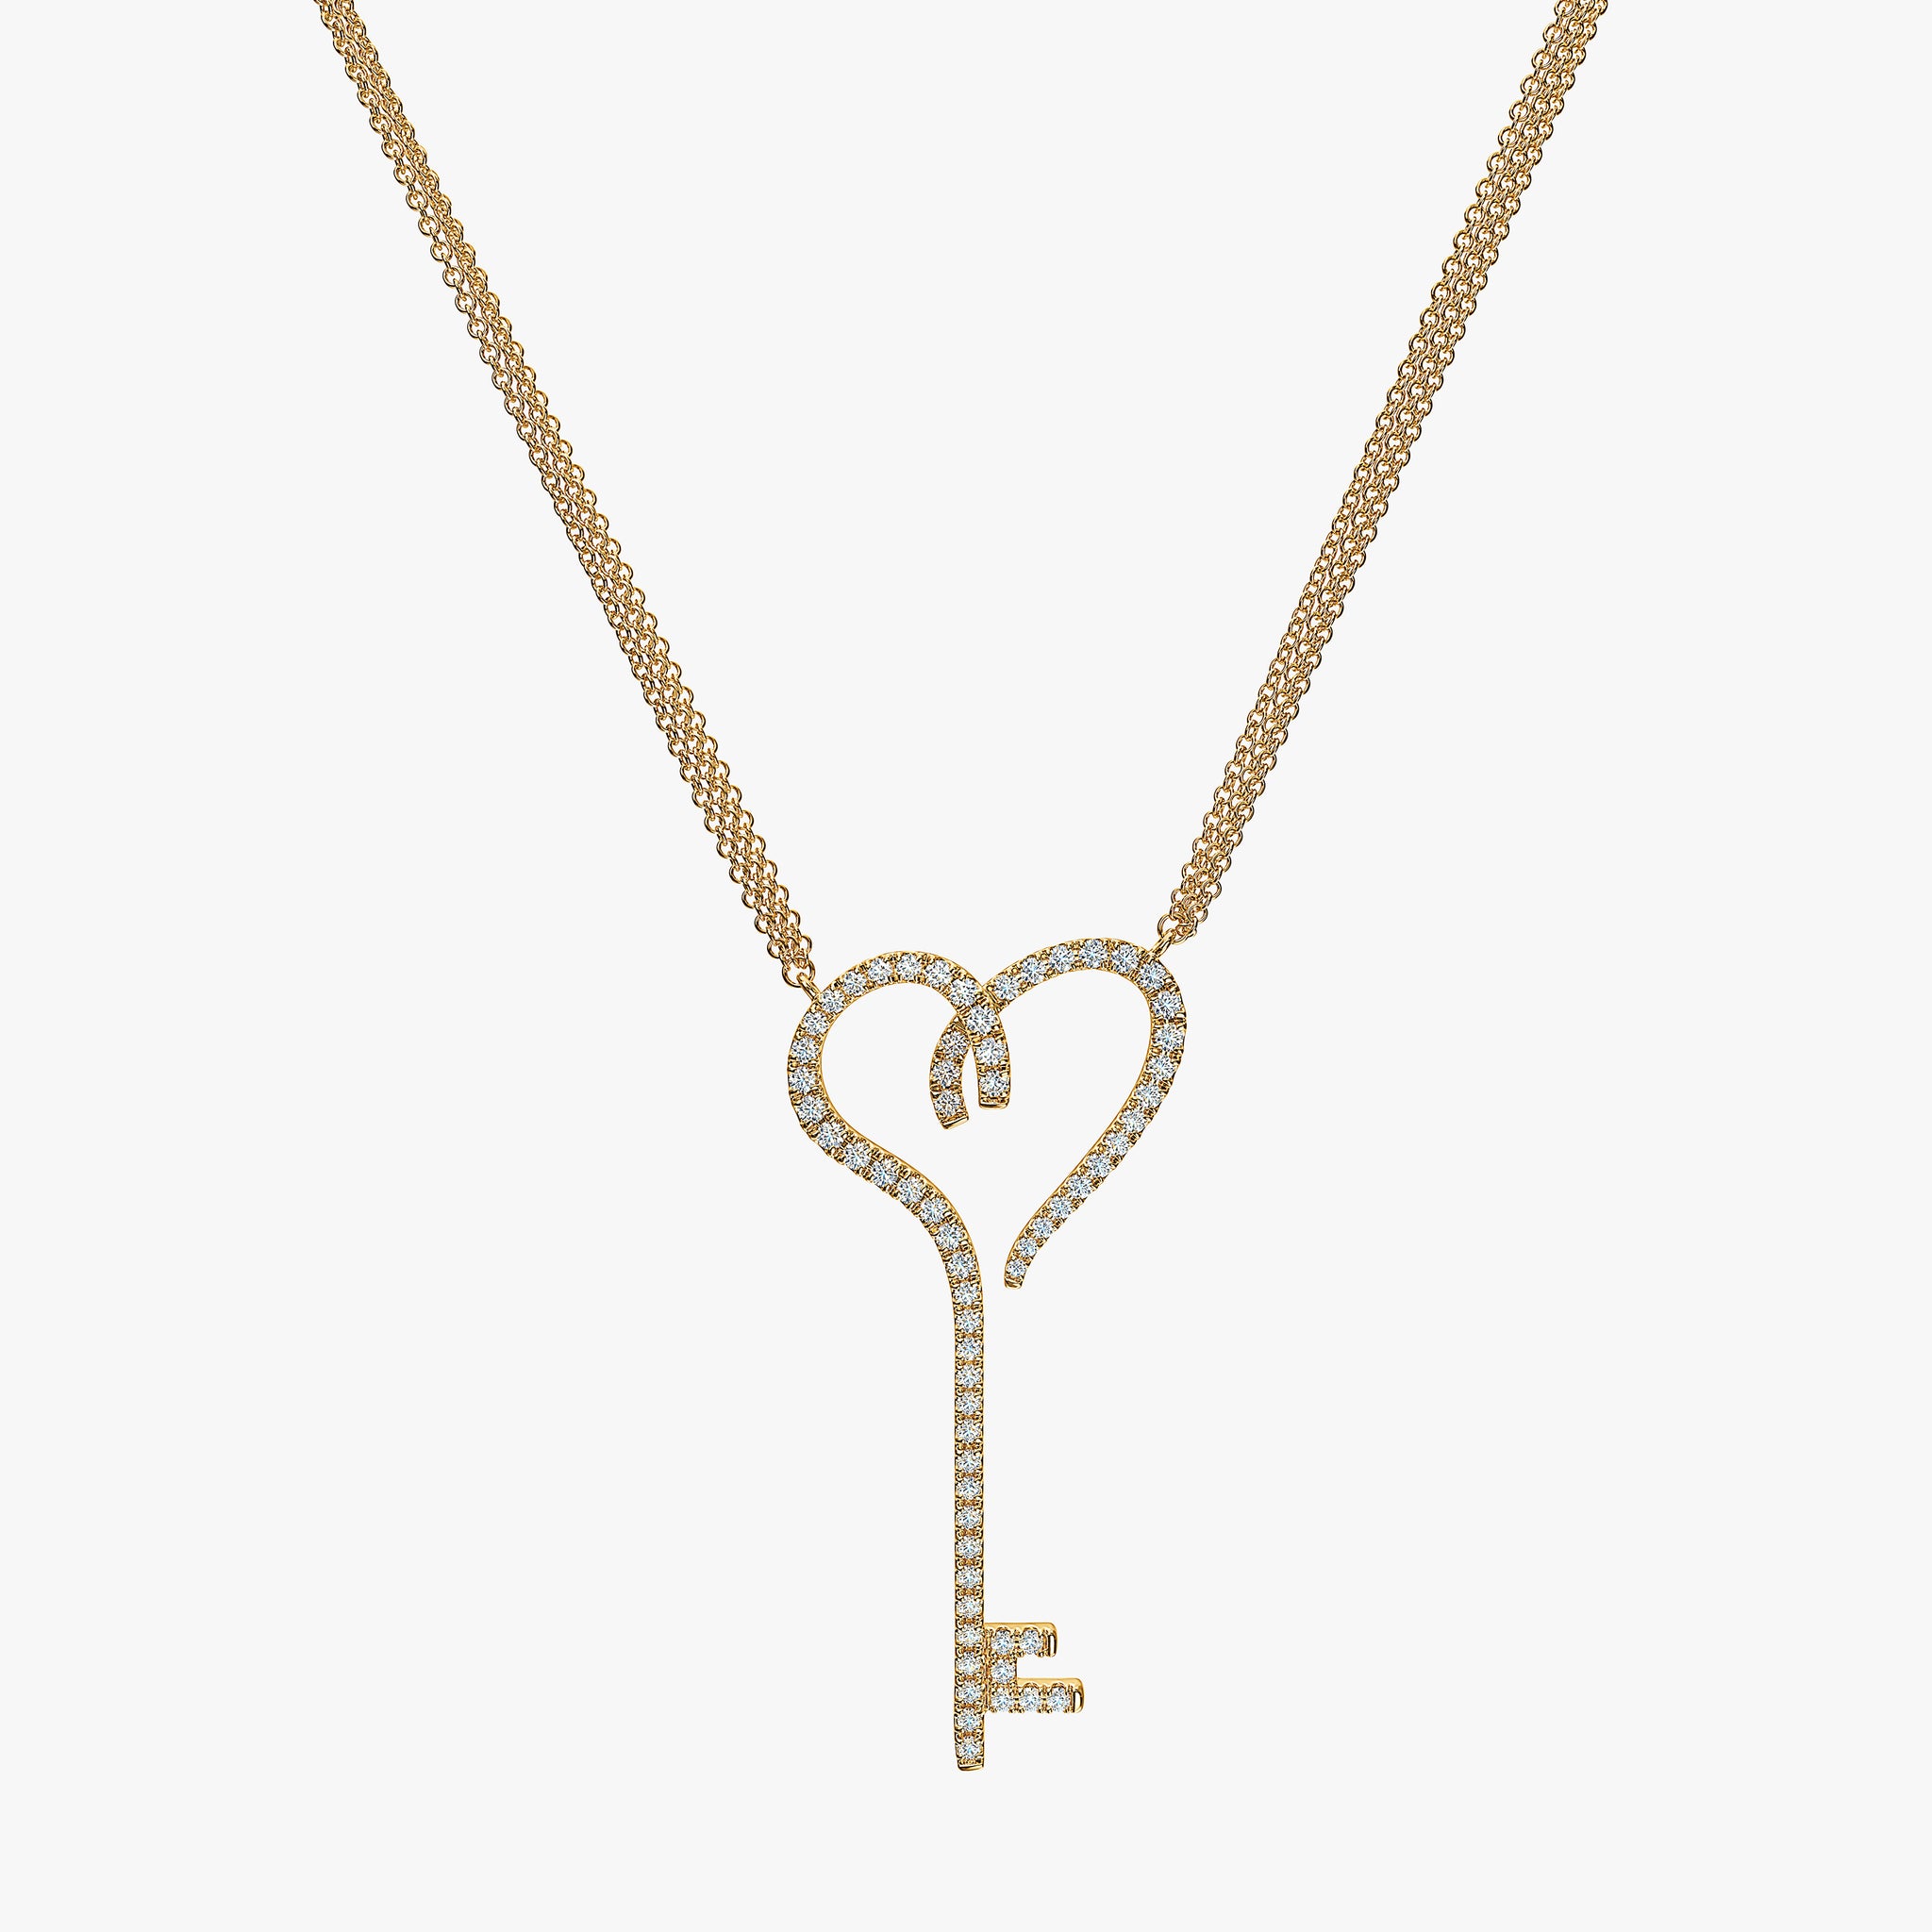 J'EVAR 14KT Yellow Gold Heart Key ALTR Lab Grown Diamond Necklace Lock View